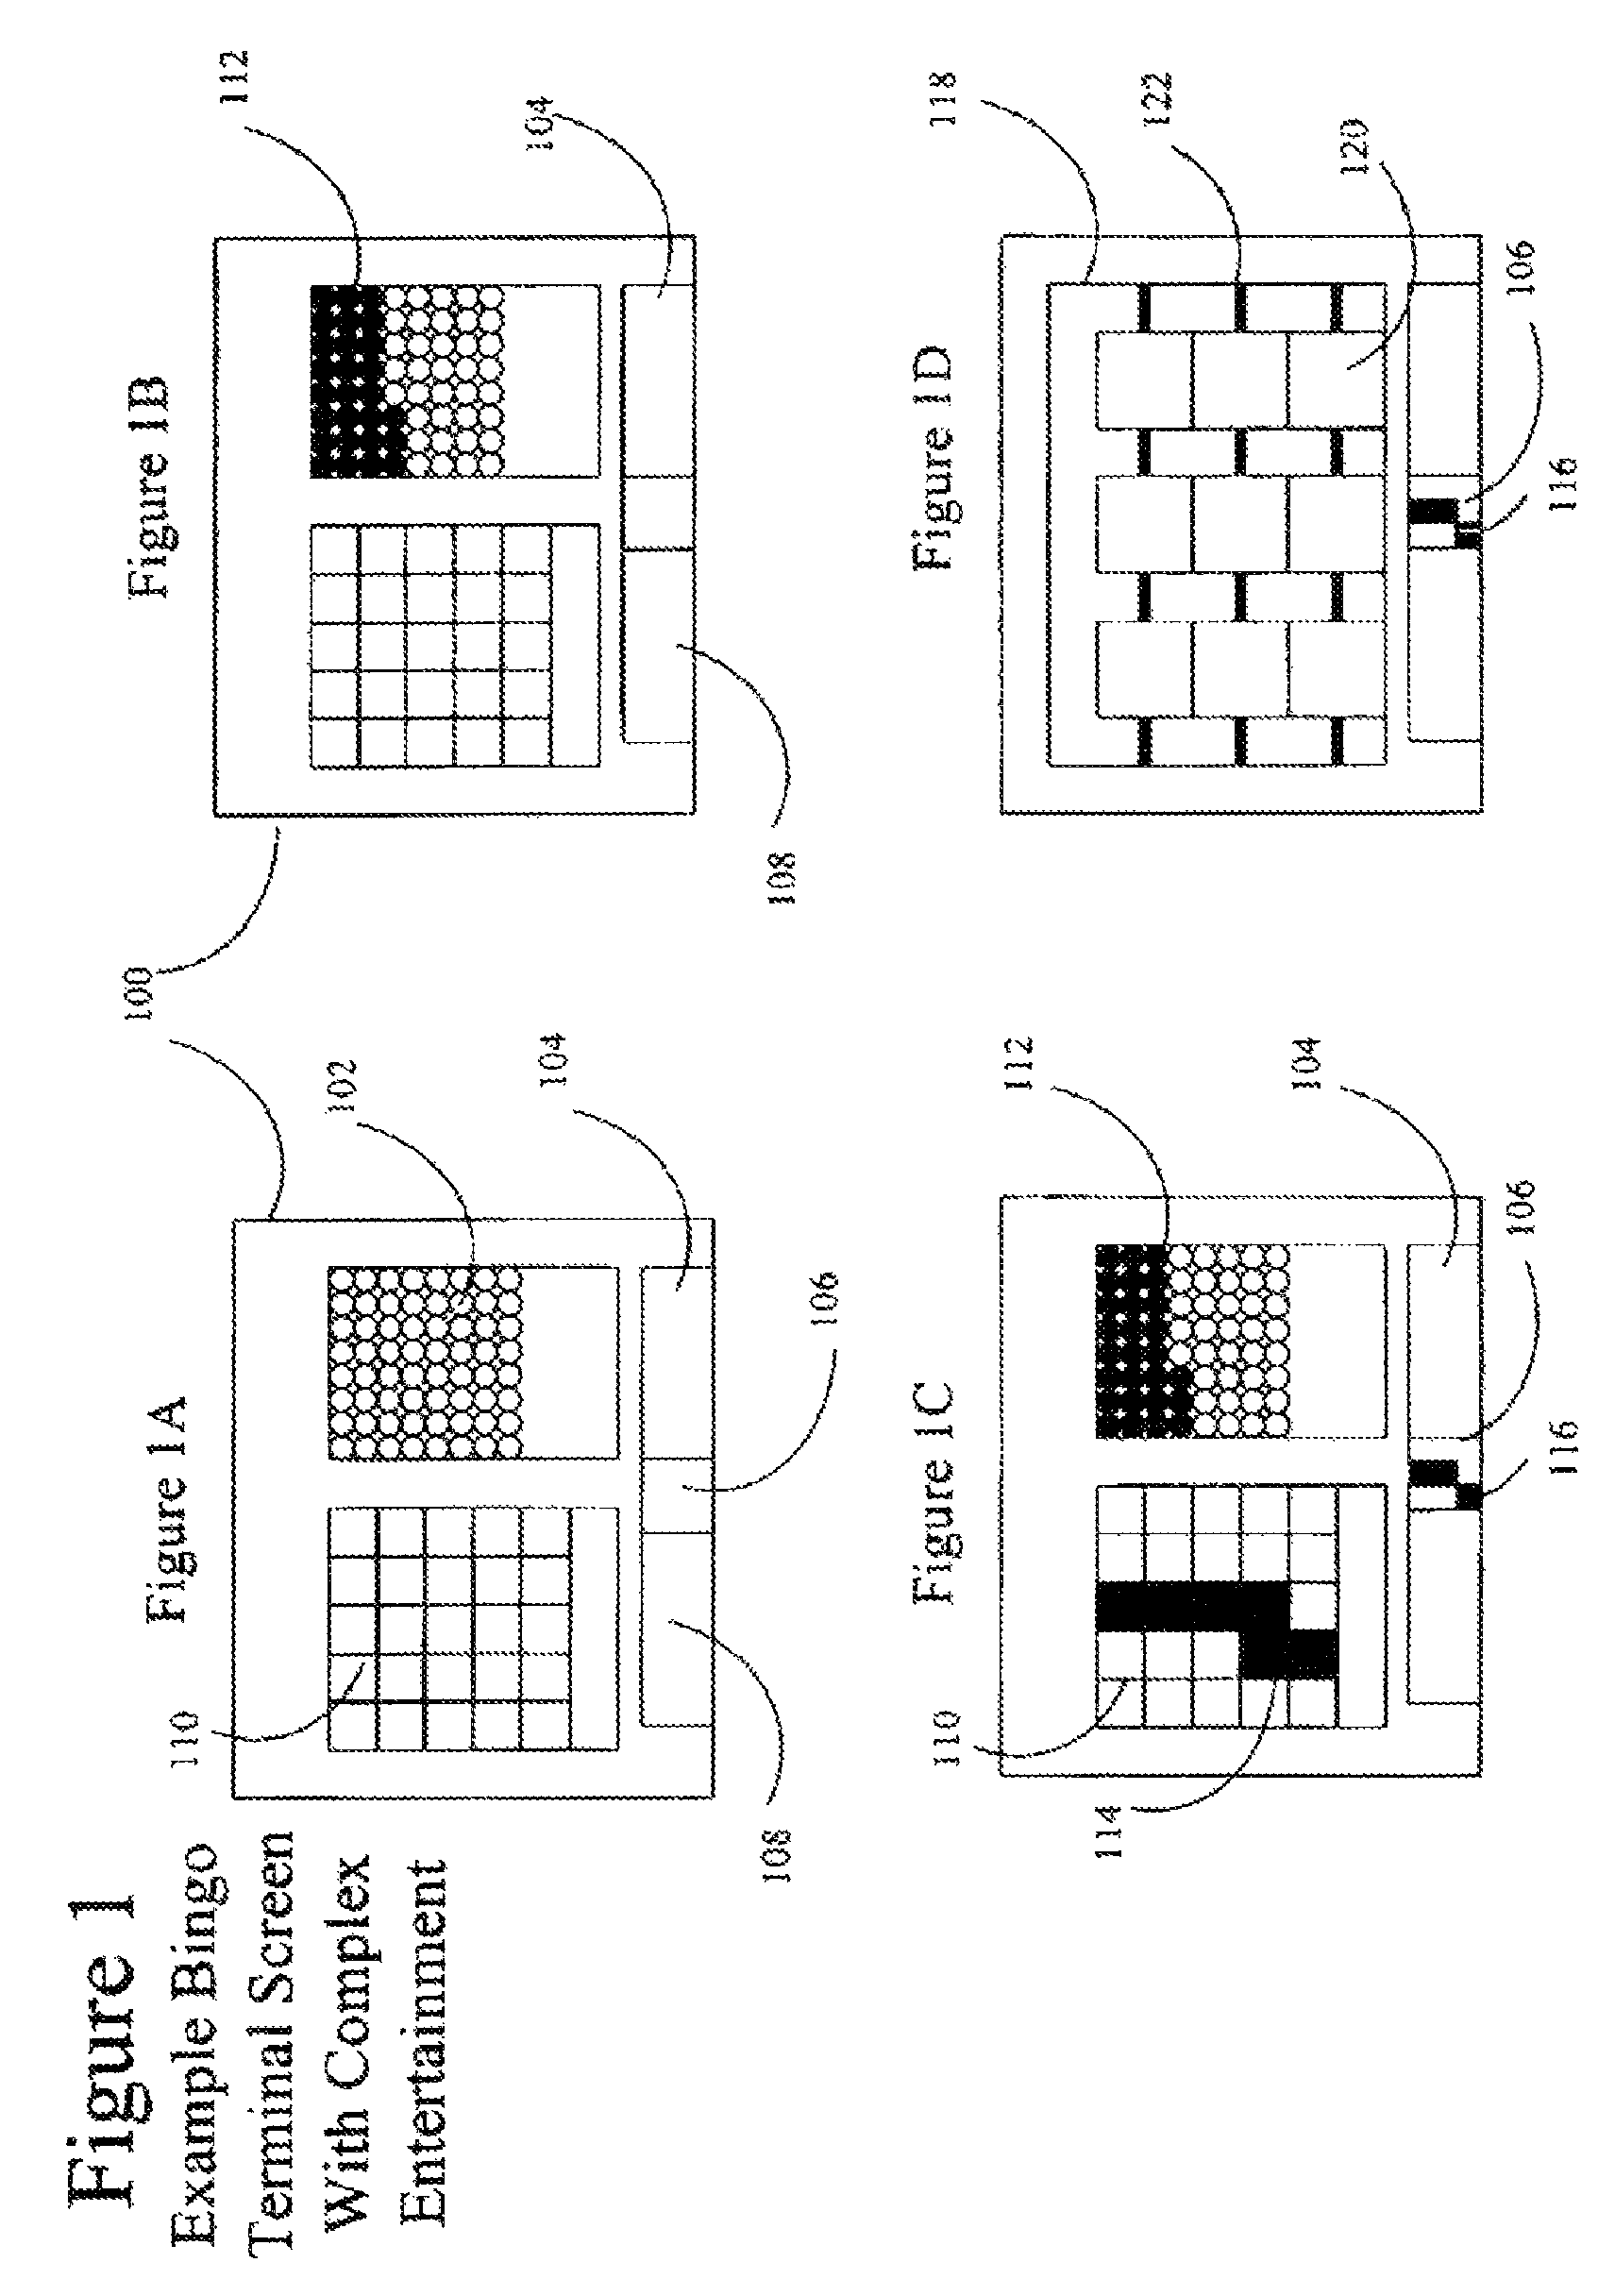 Short-line bingo method and apparatus